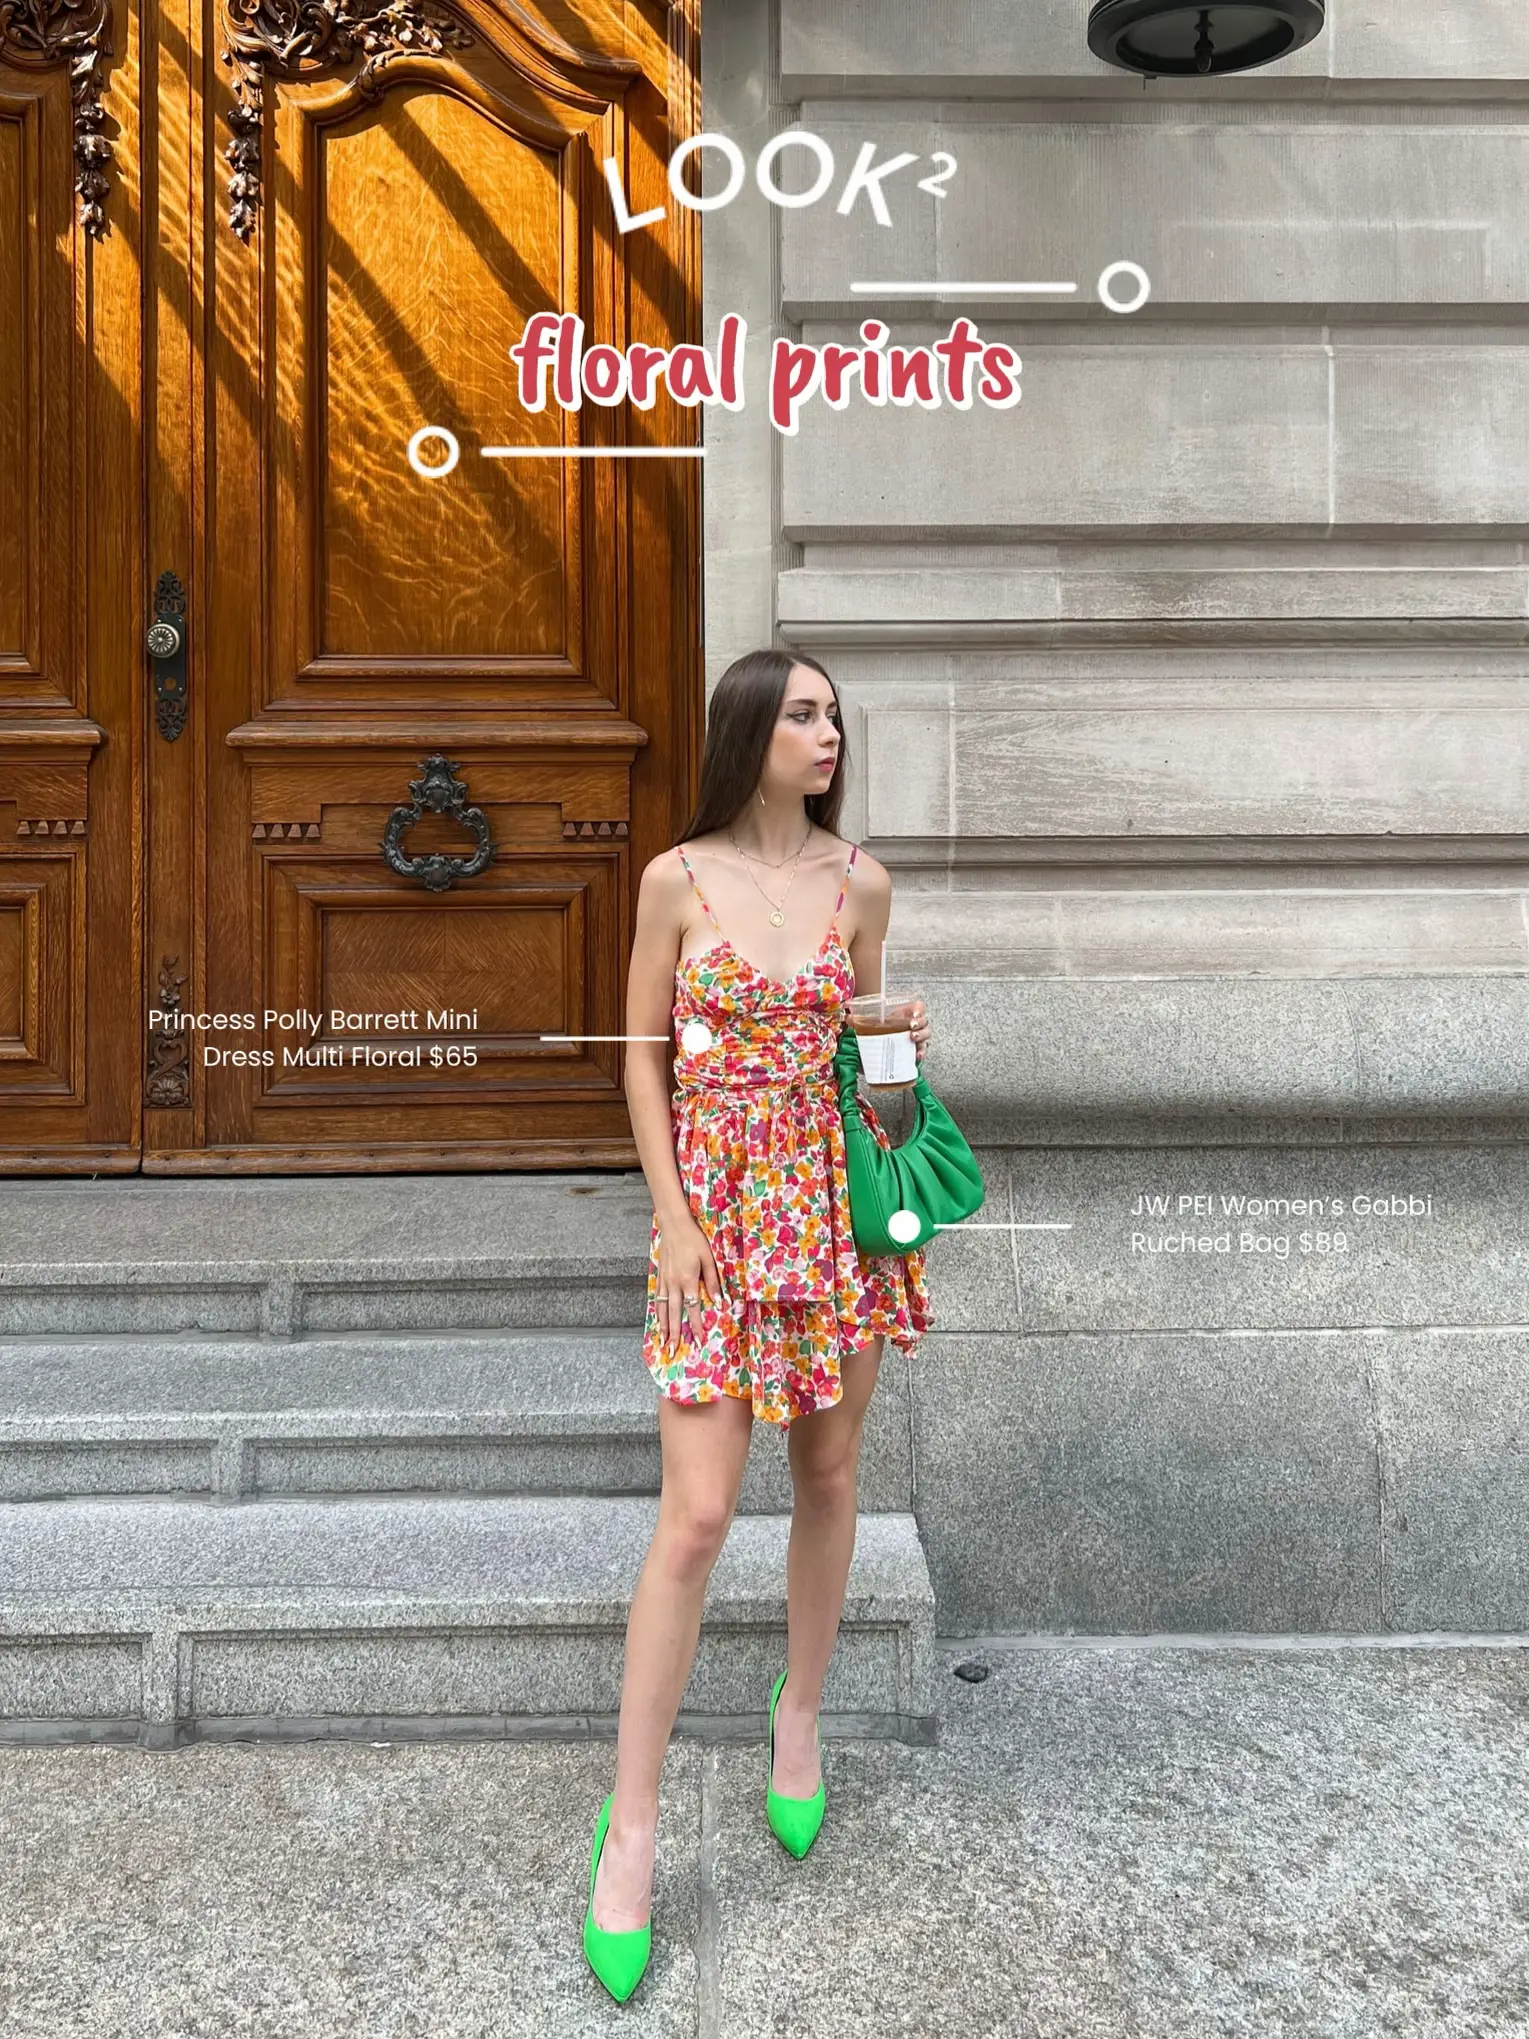 Love Notes Xia Contrast Lace Trim Mini Dress - Green